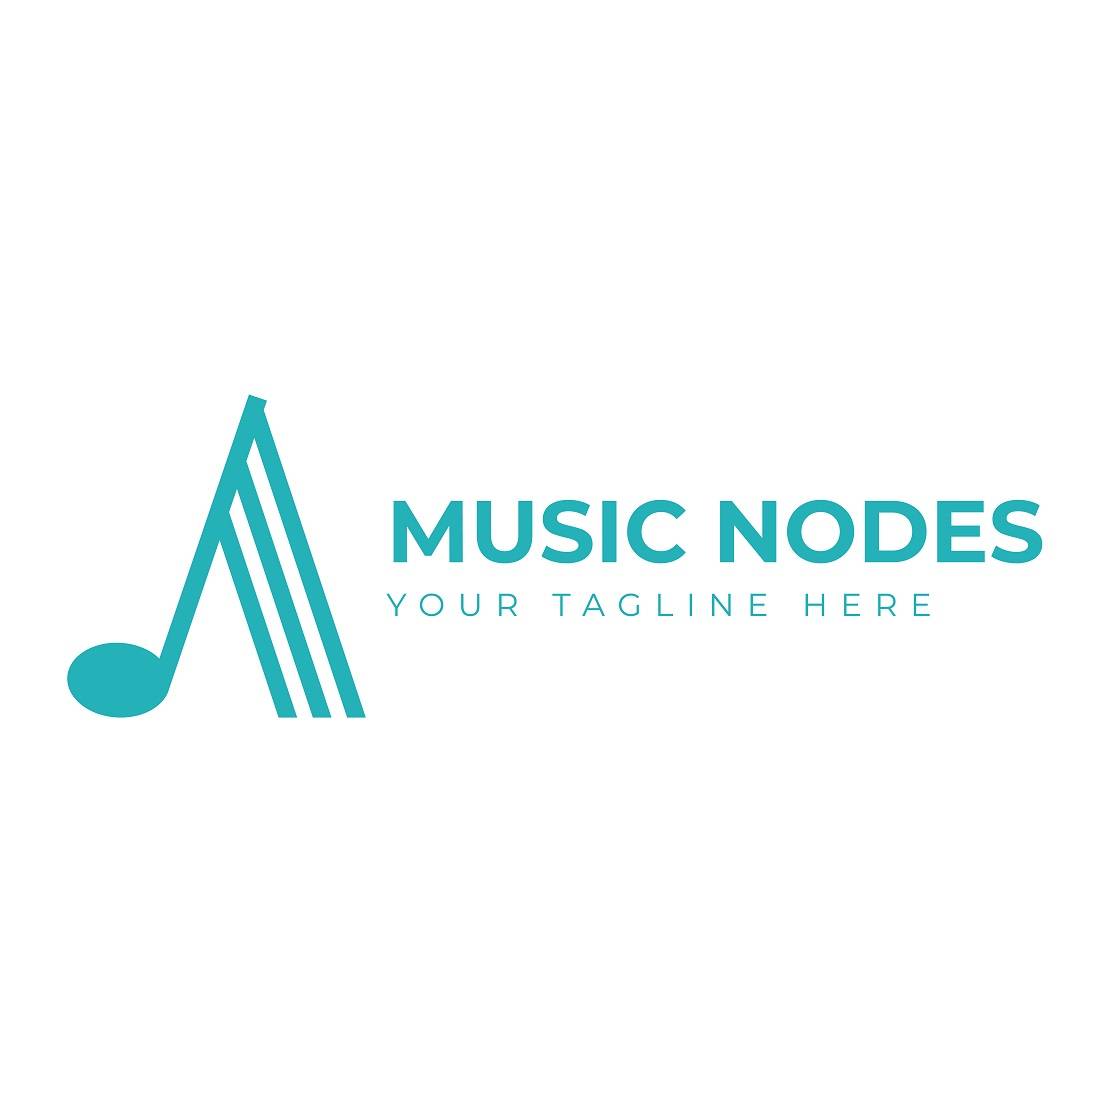 Music nodes logo design